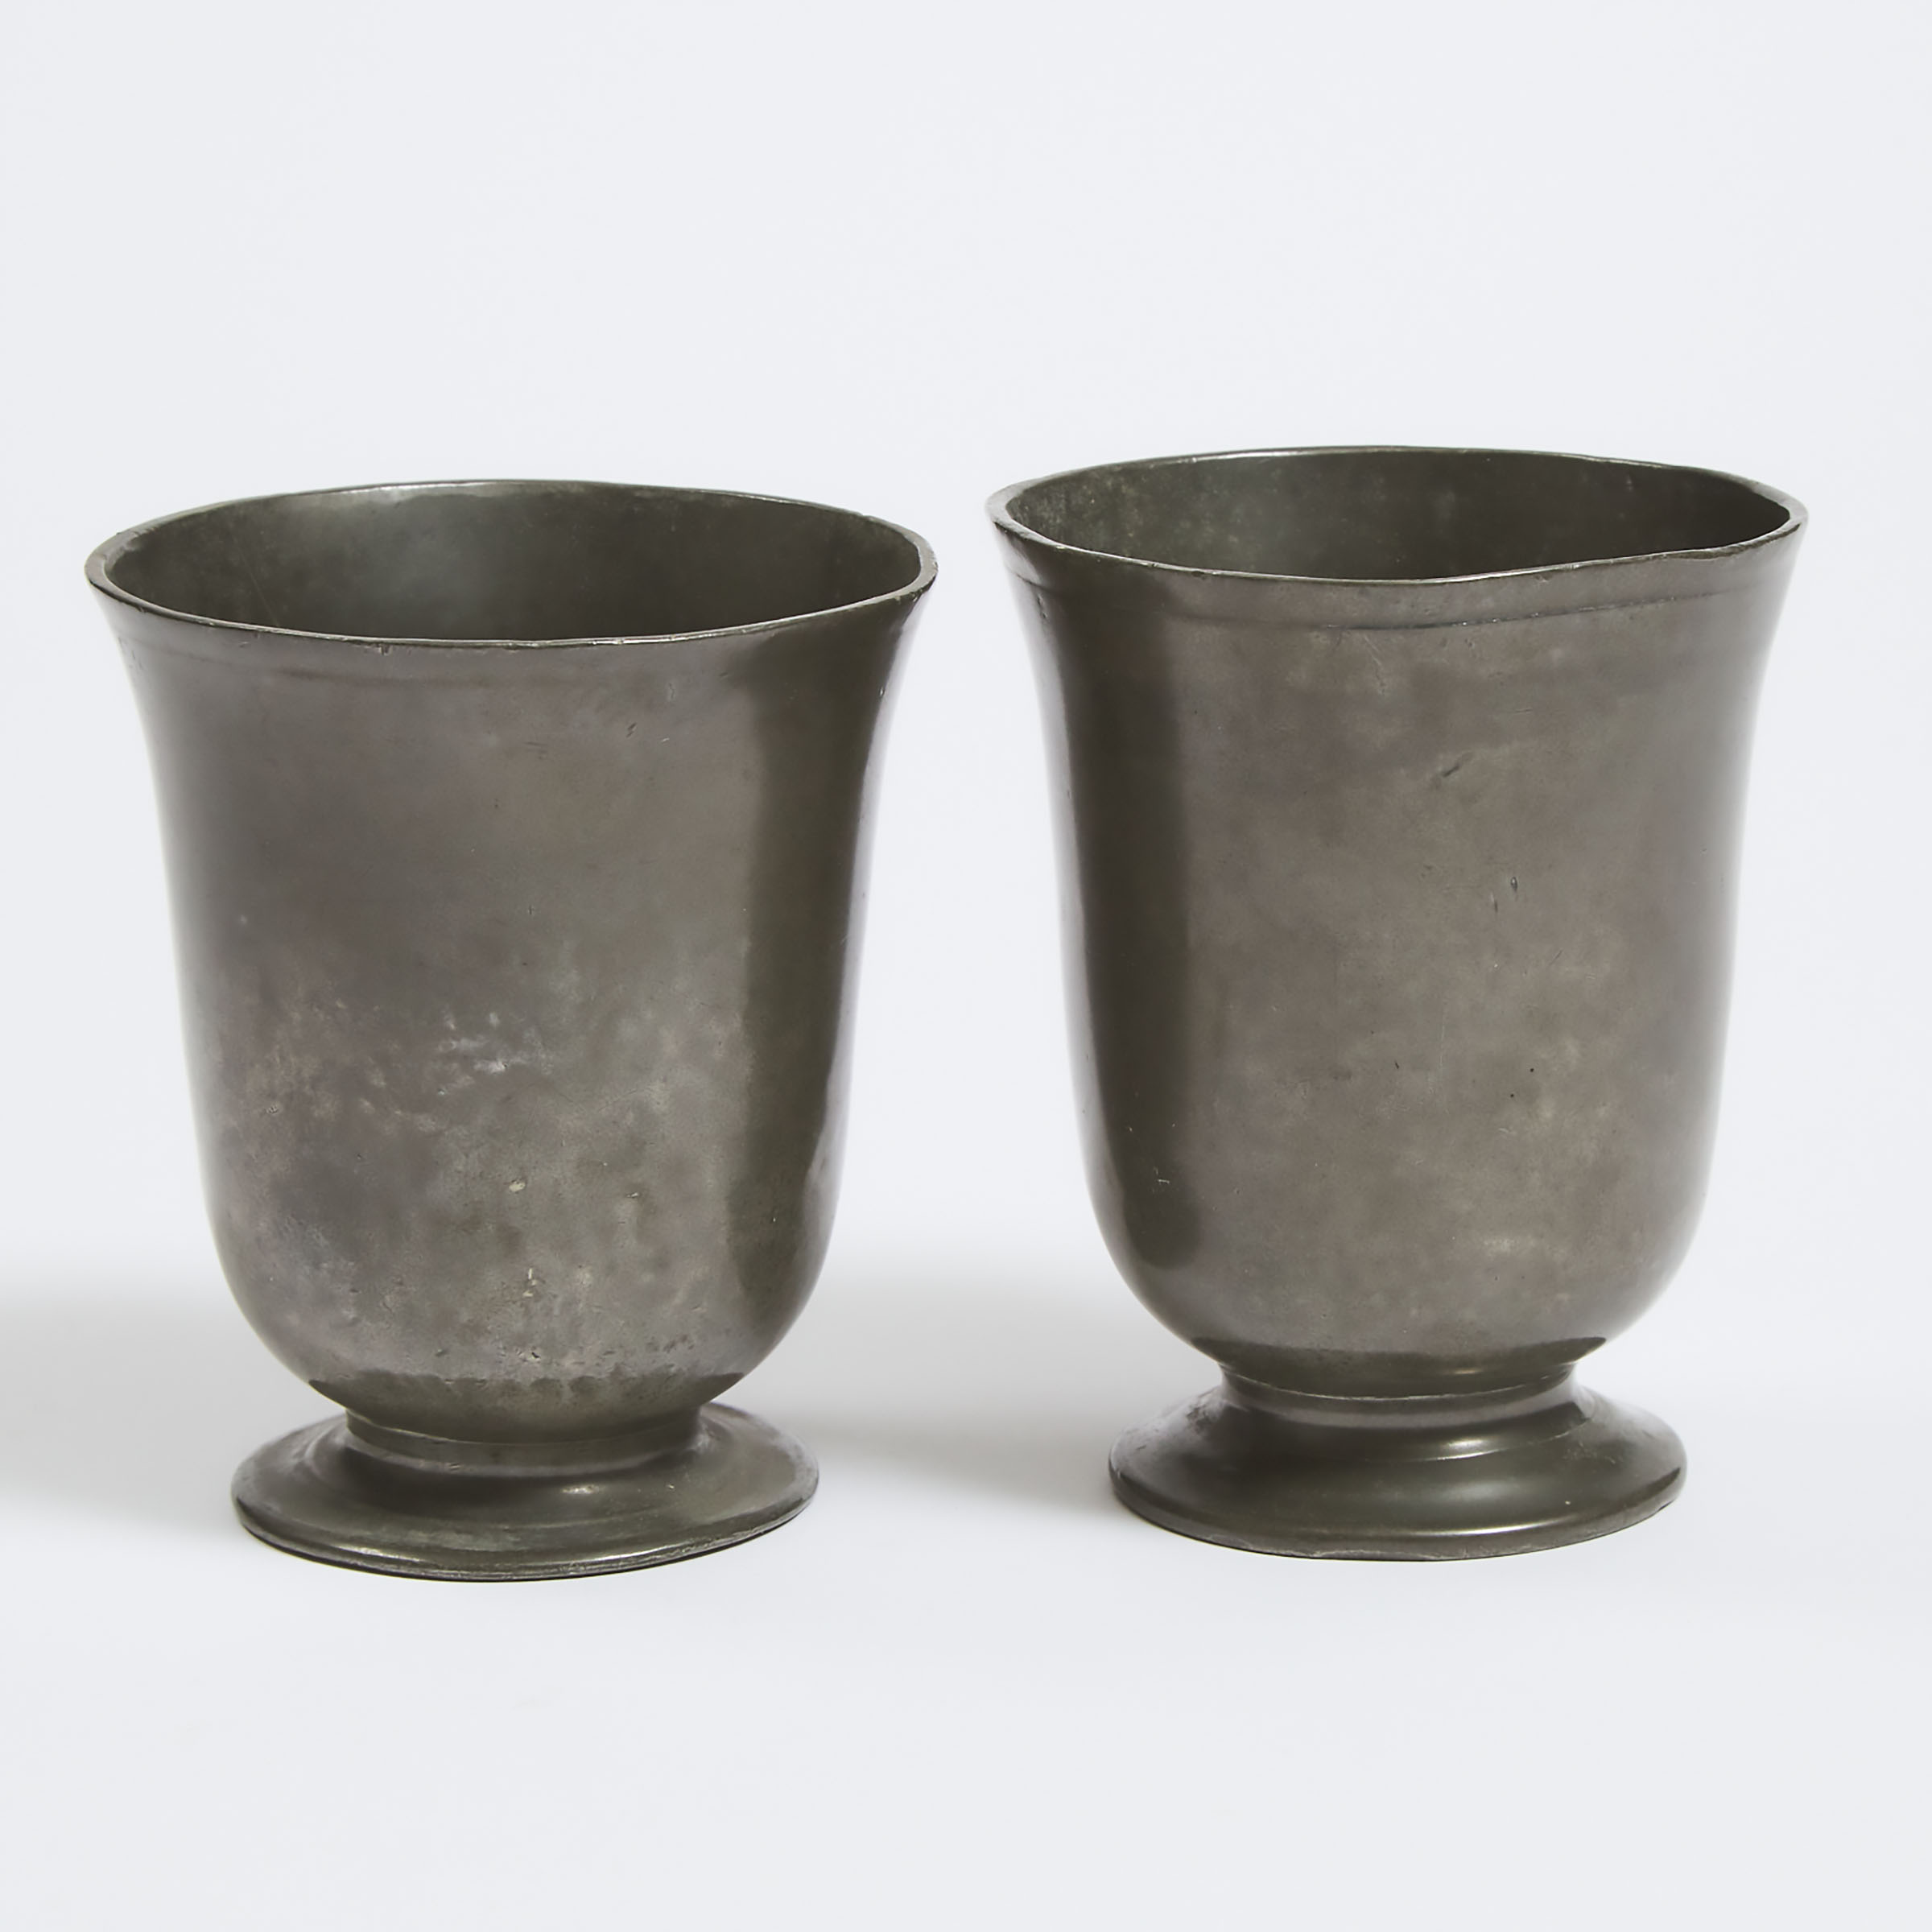 Pair of Scottish Wine Beakers Attributed to David Scouler, Glasgow, 1819-1845